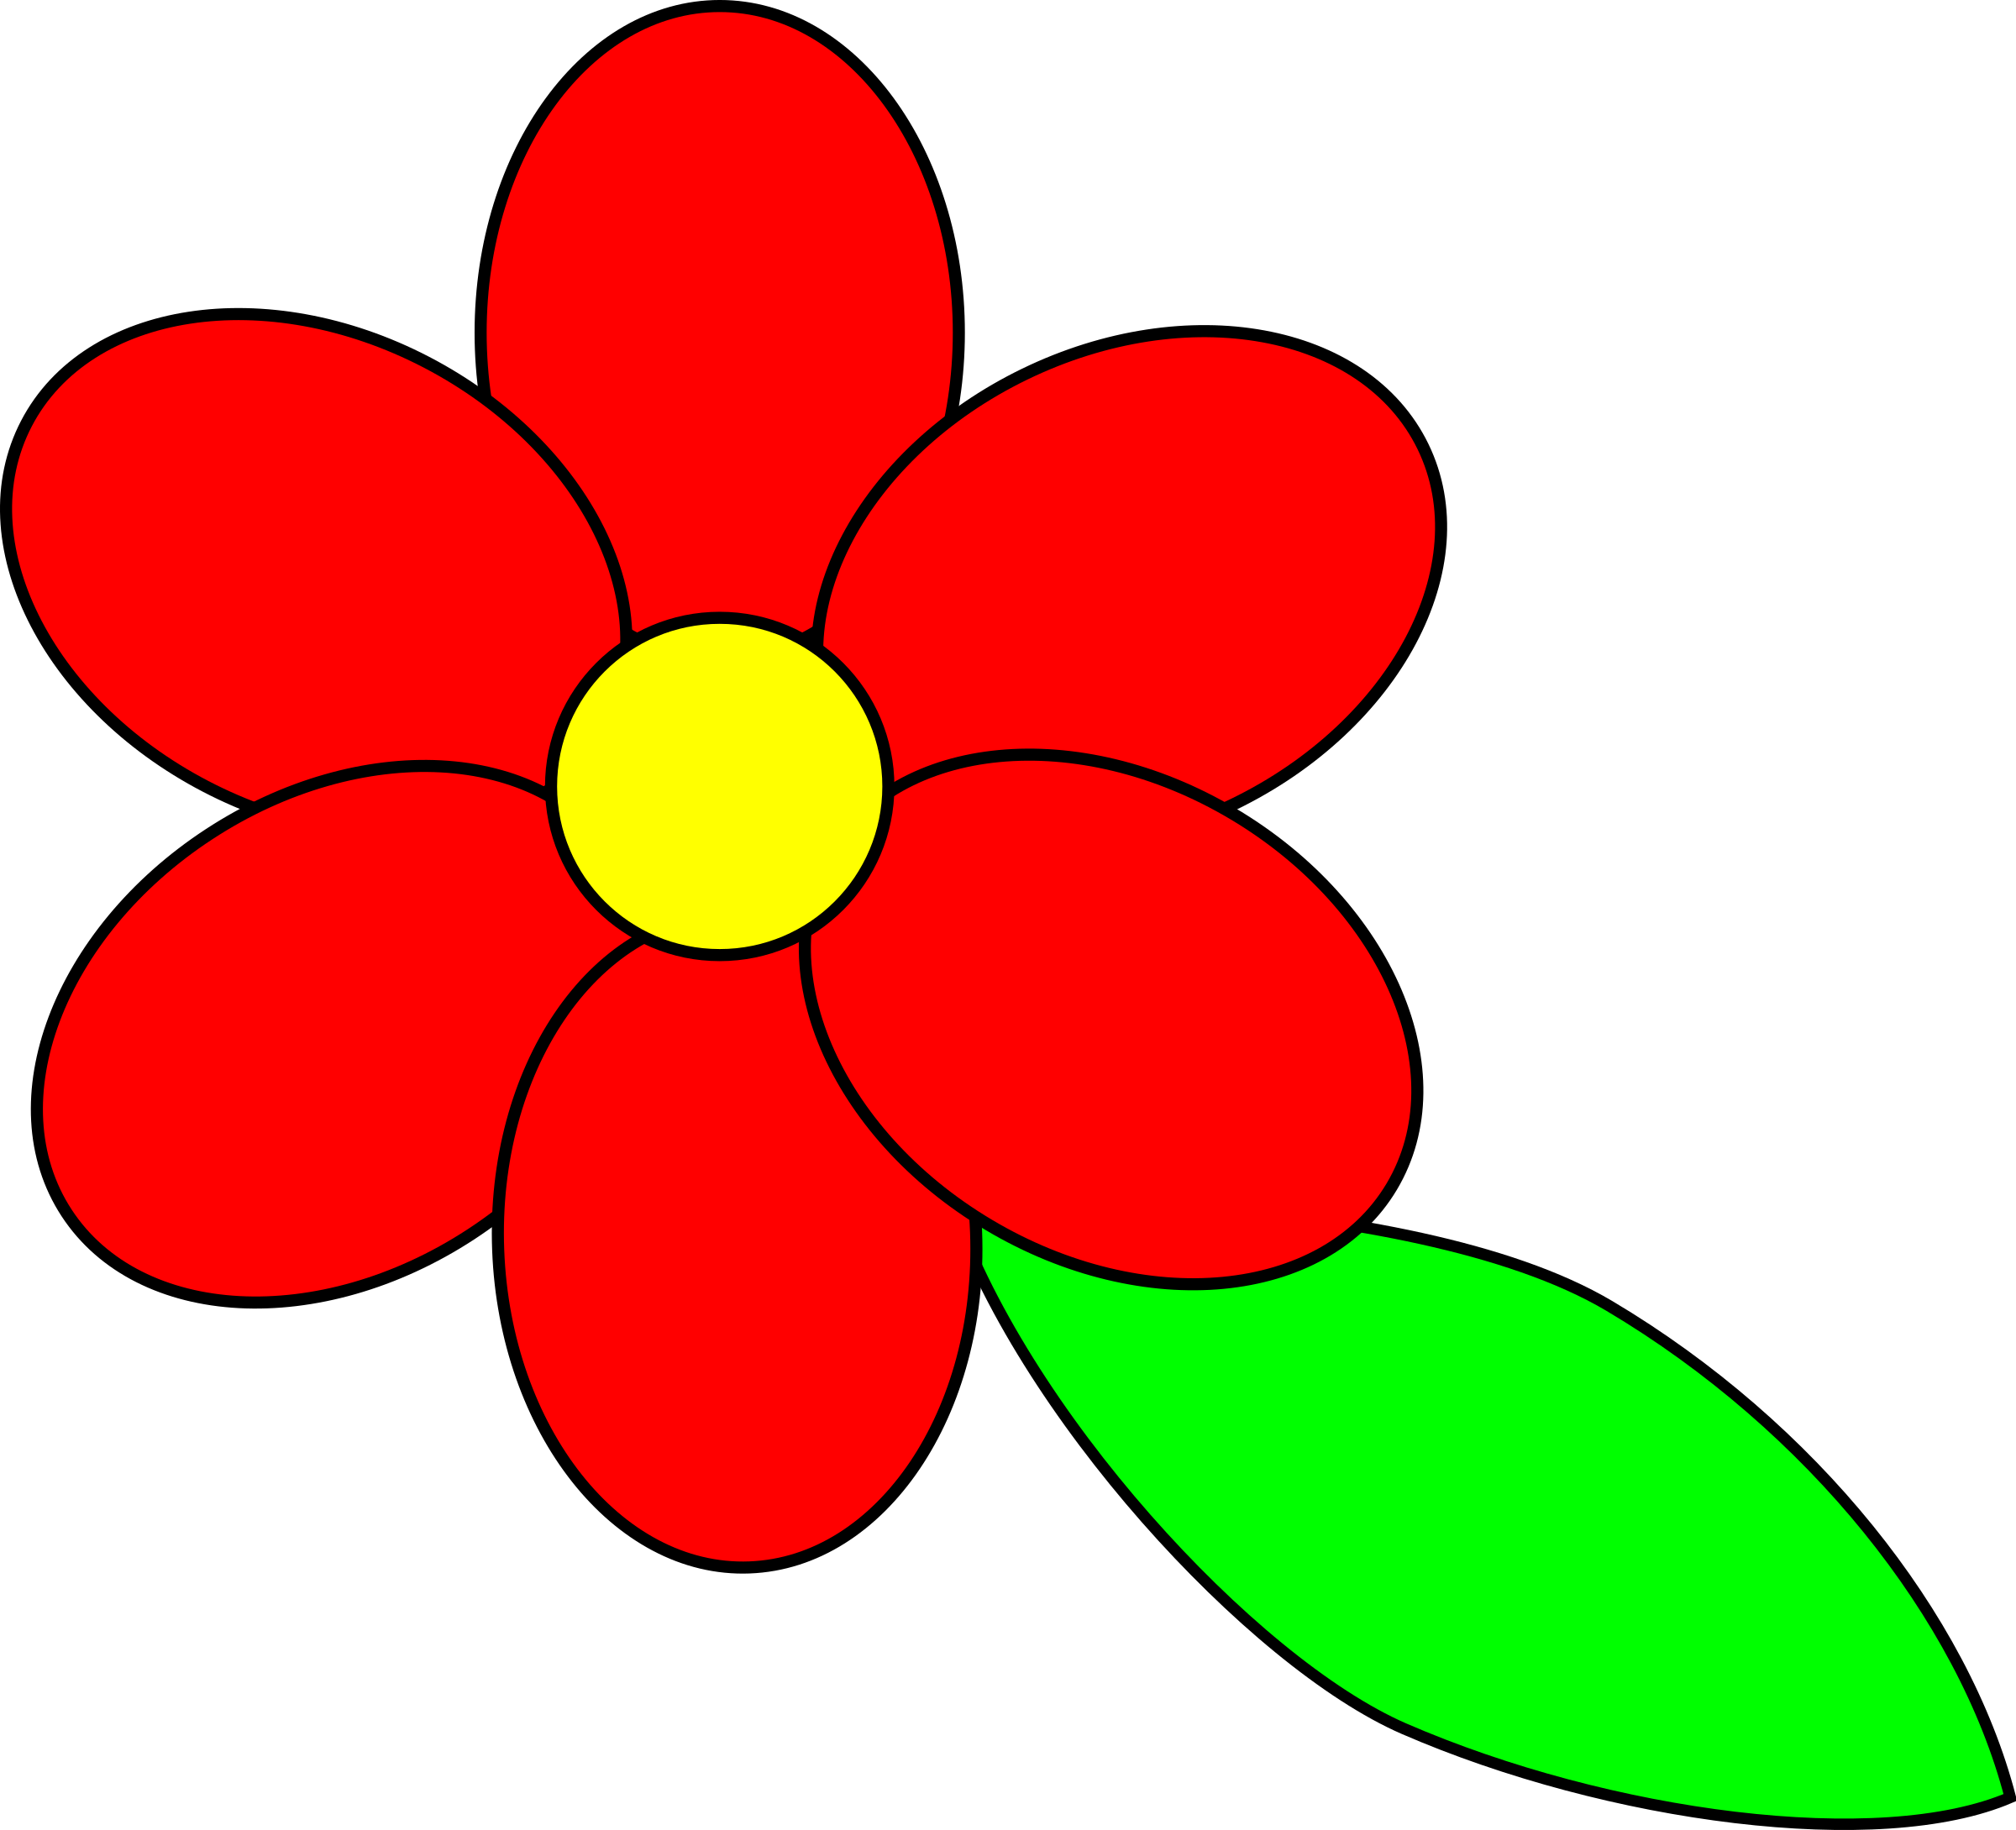 Flower clipart green. Six red petals black